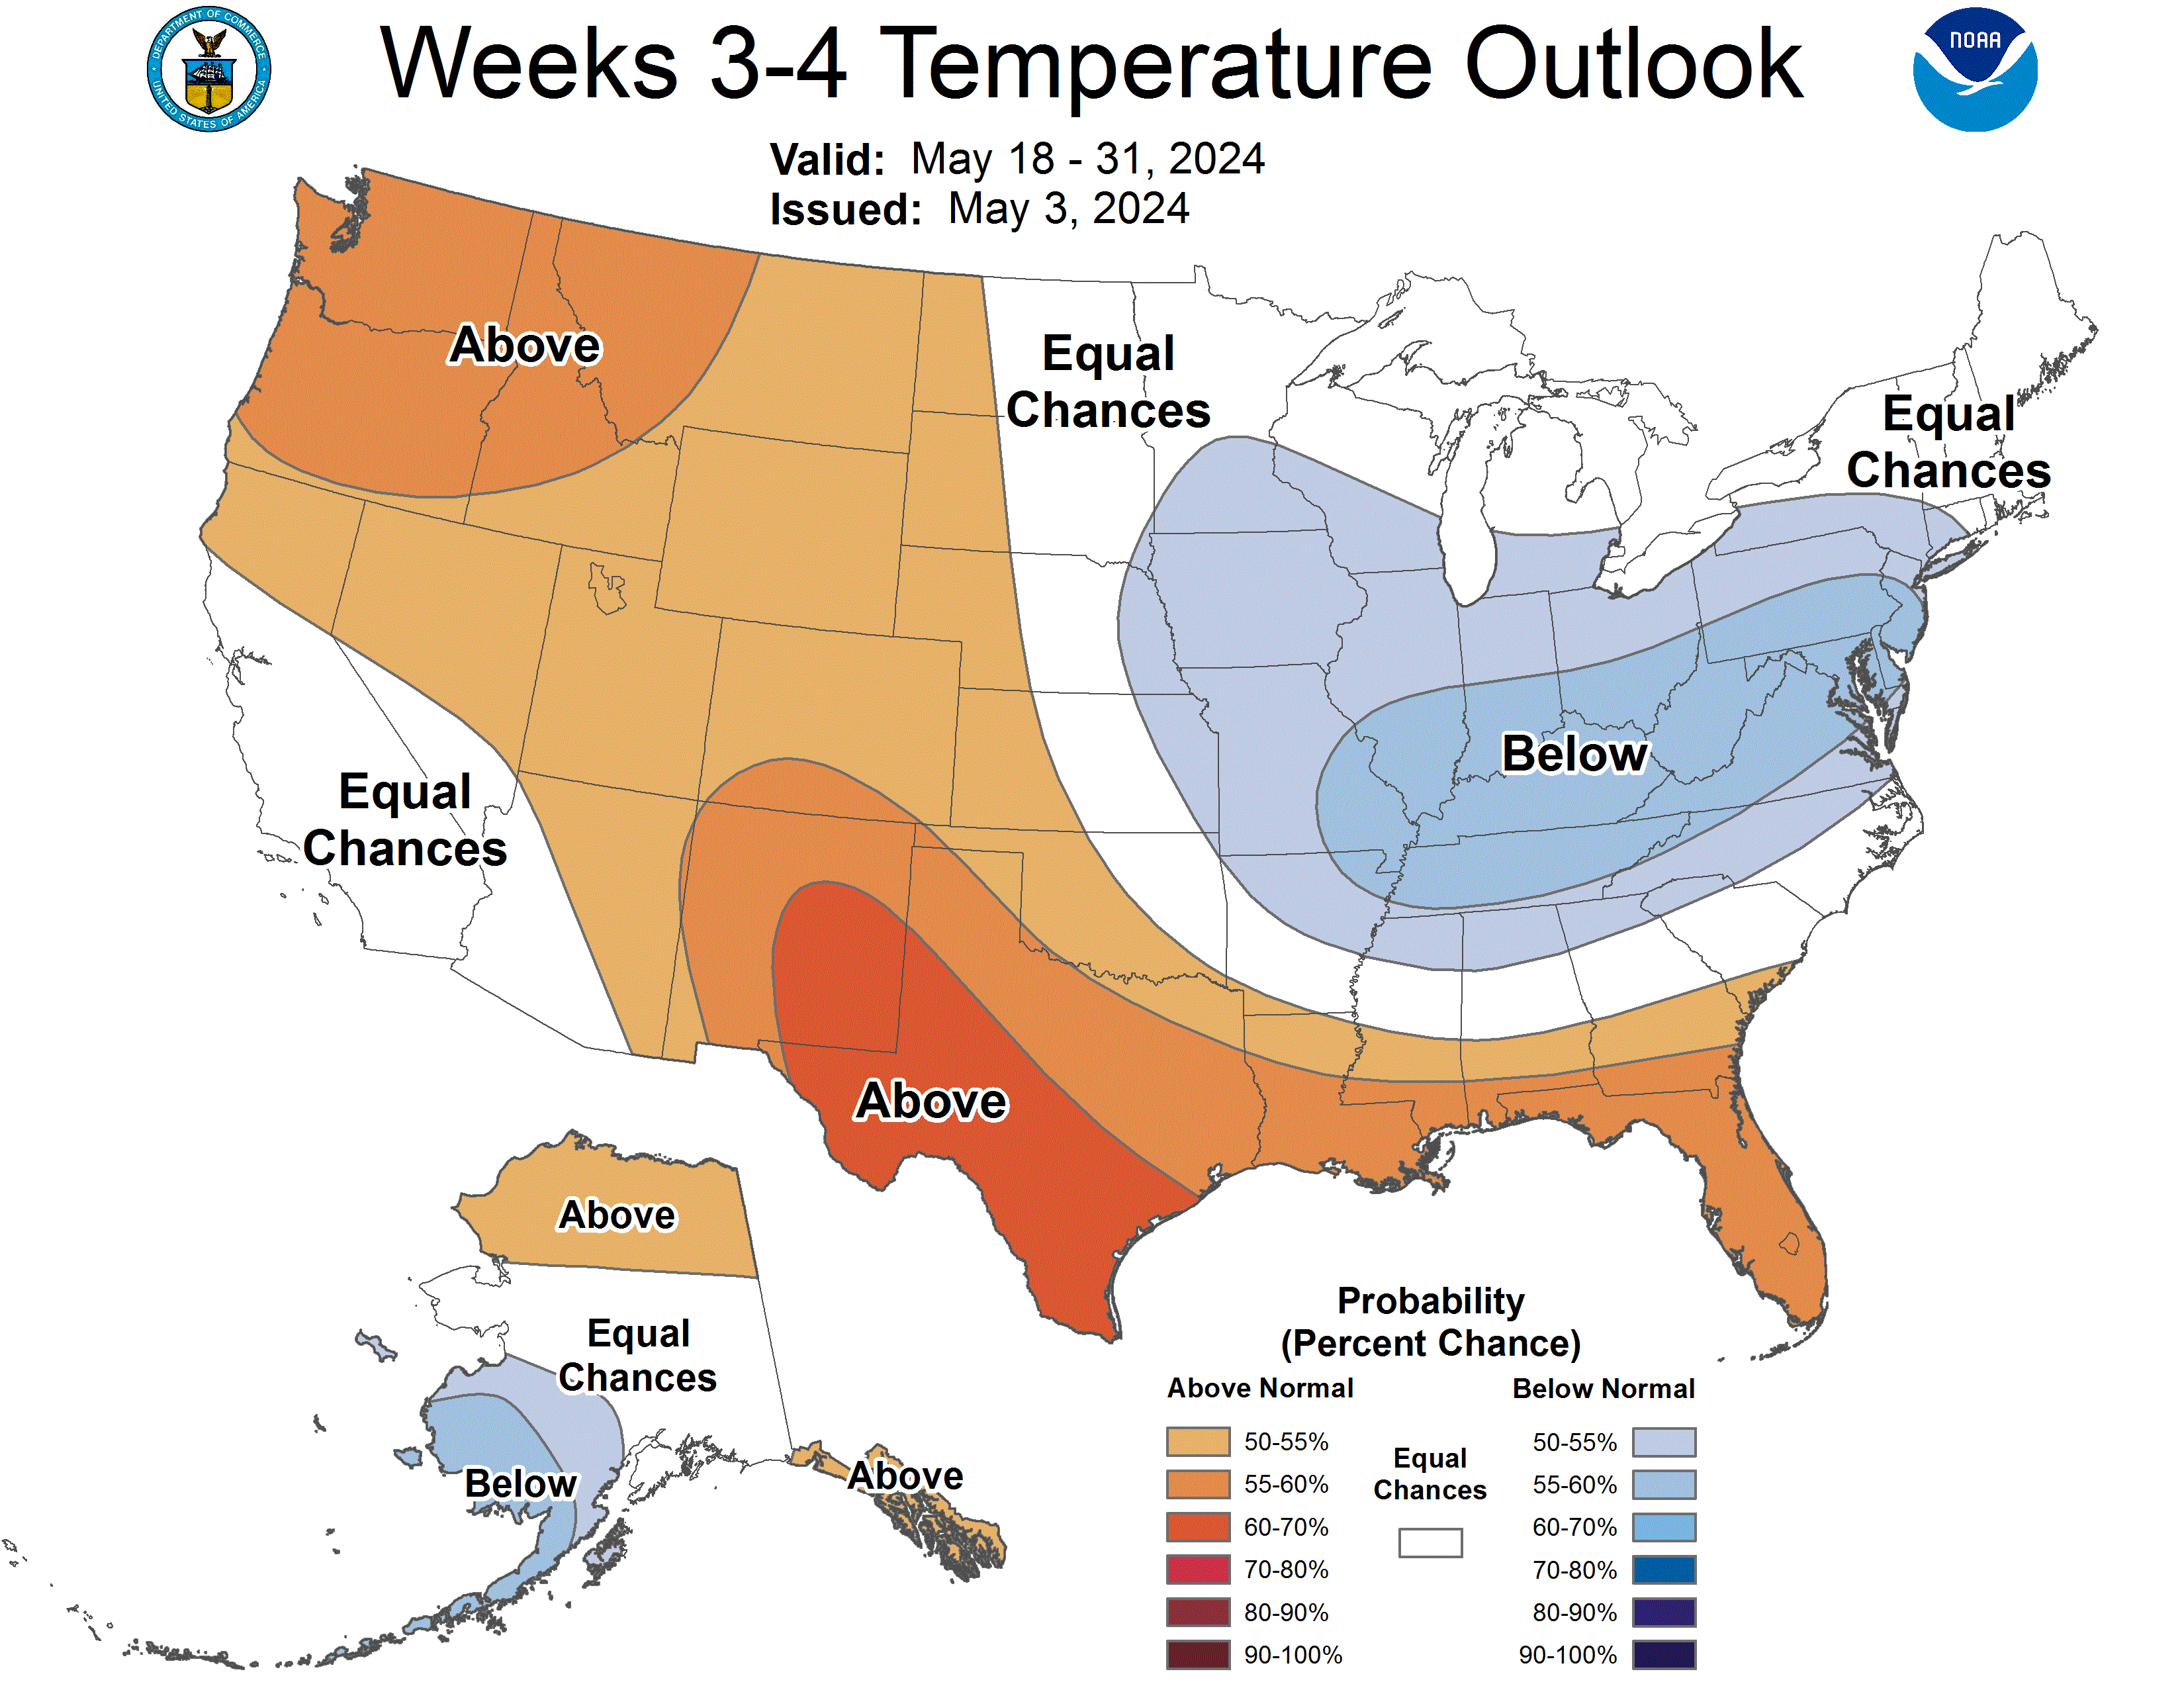 3 - 4 Week Temperature